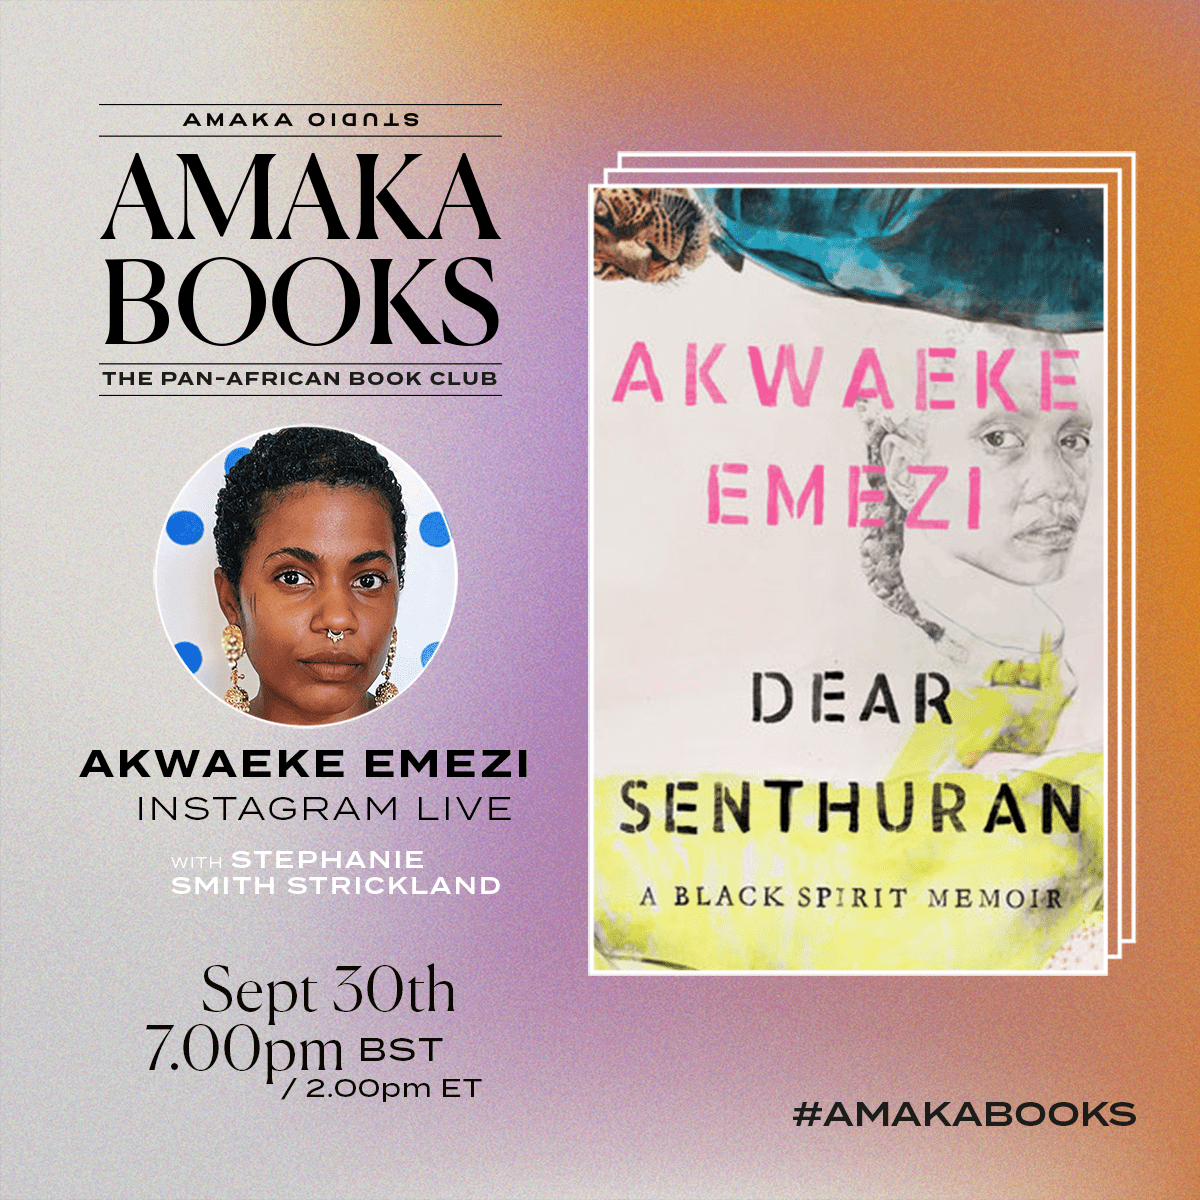 AMAKA Books with Akwaeke Emezi